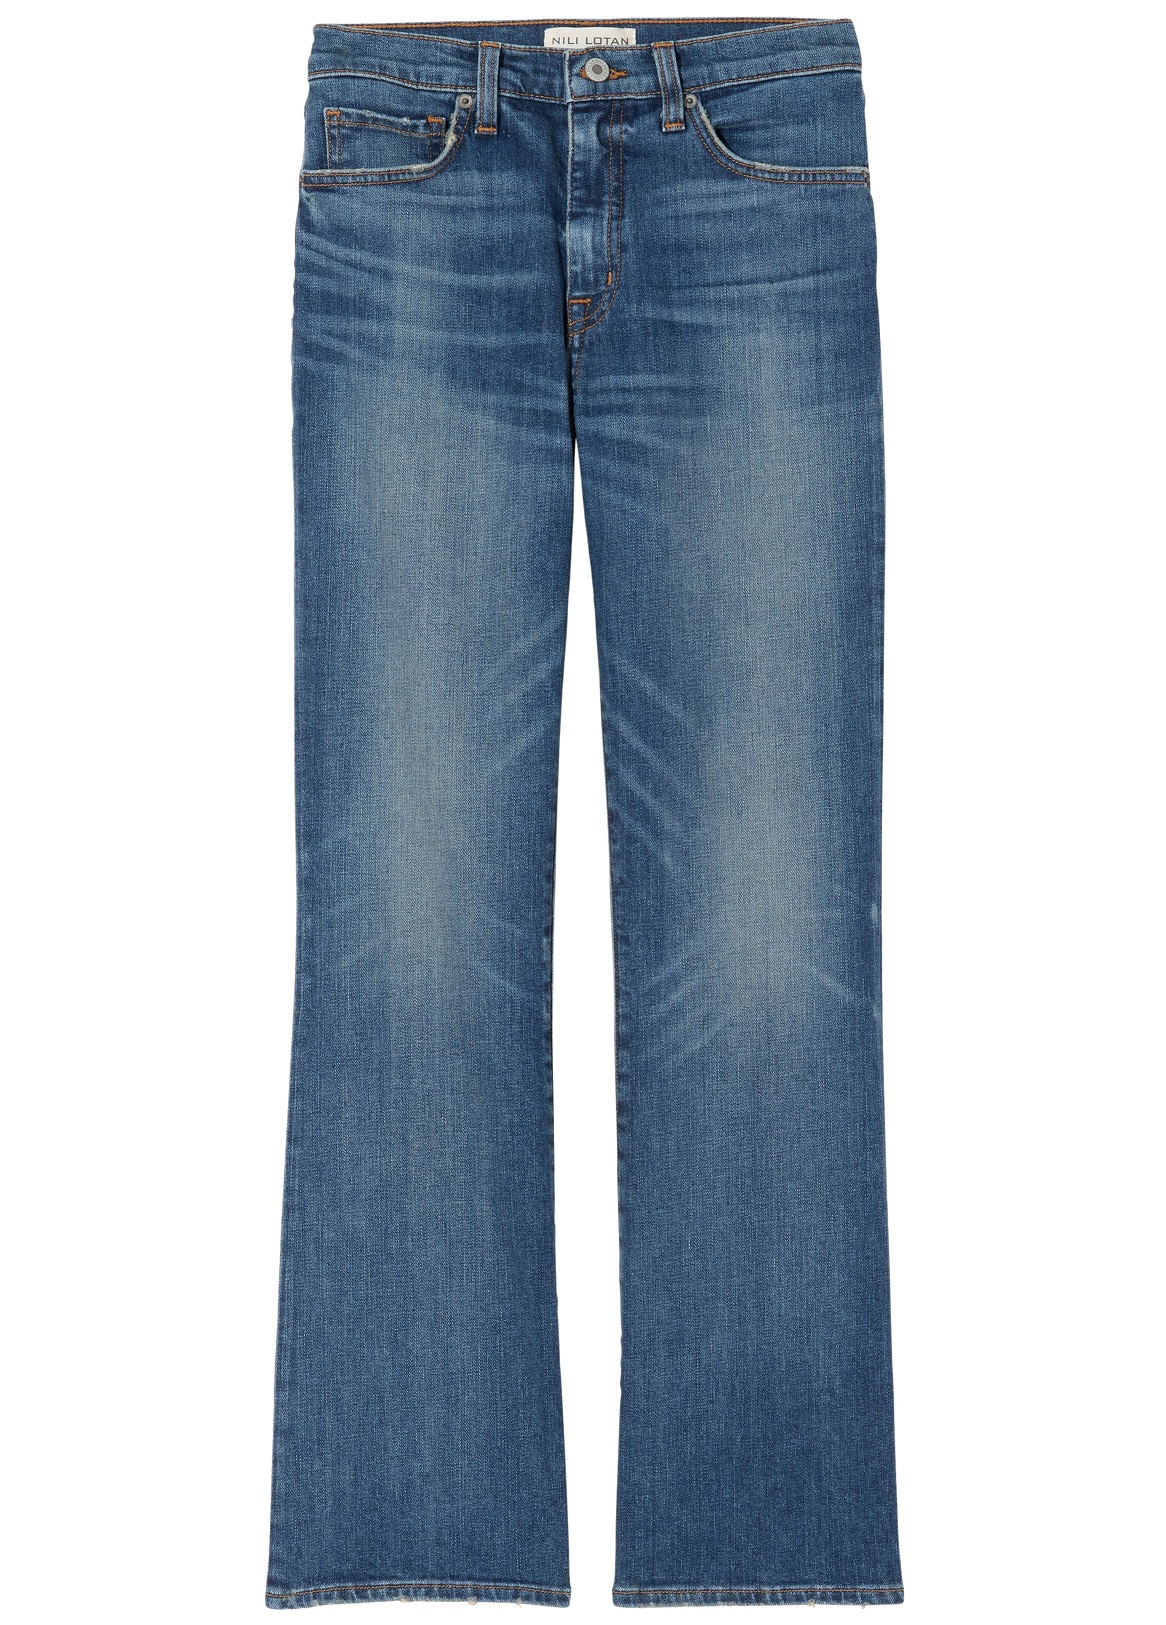 NILI LOTAN Boot Cut Jeans in Classic Wash